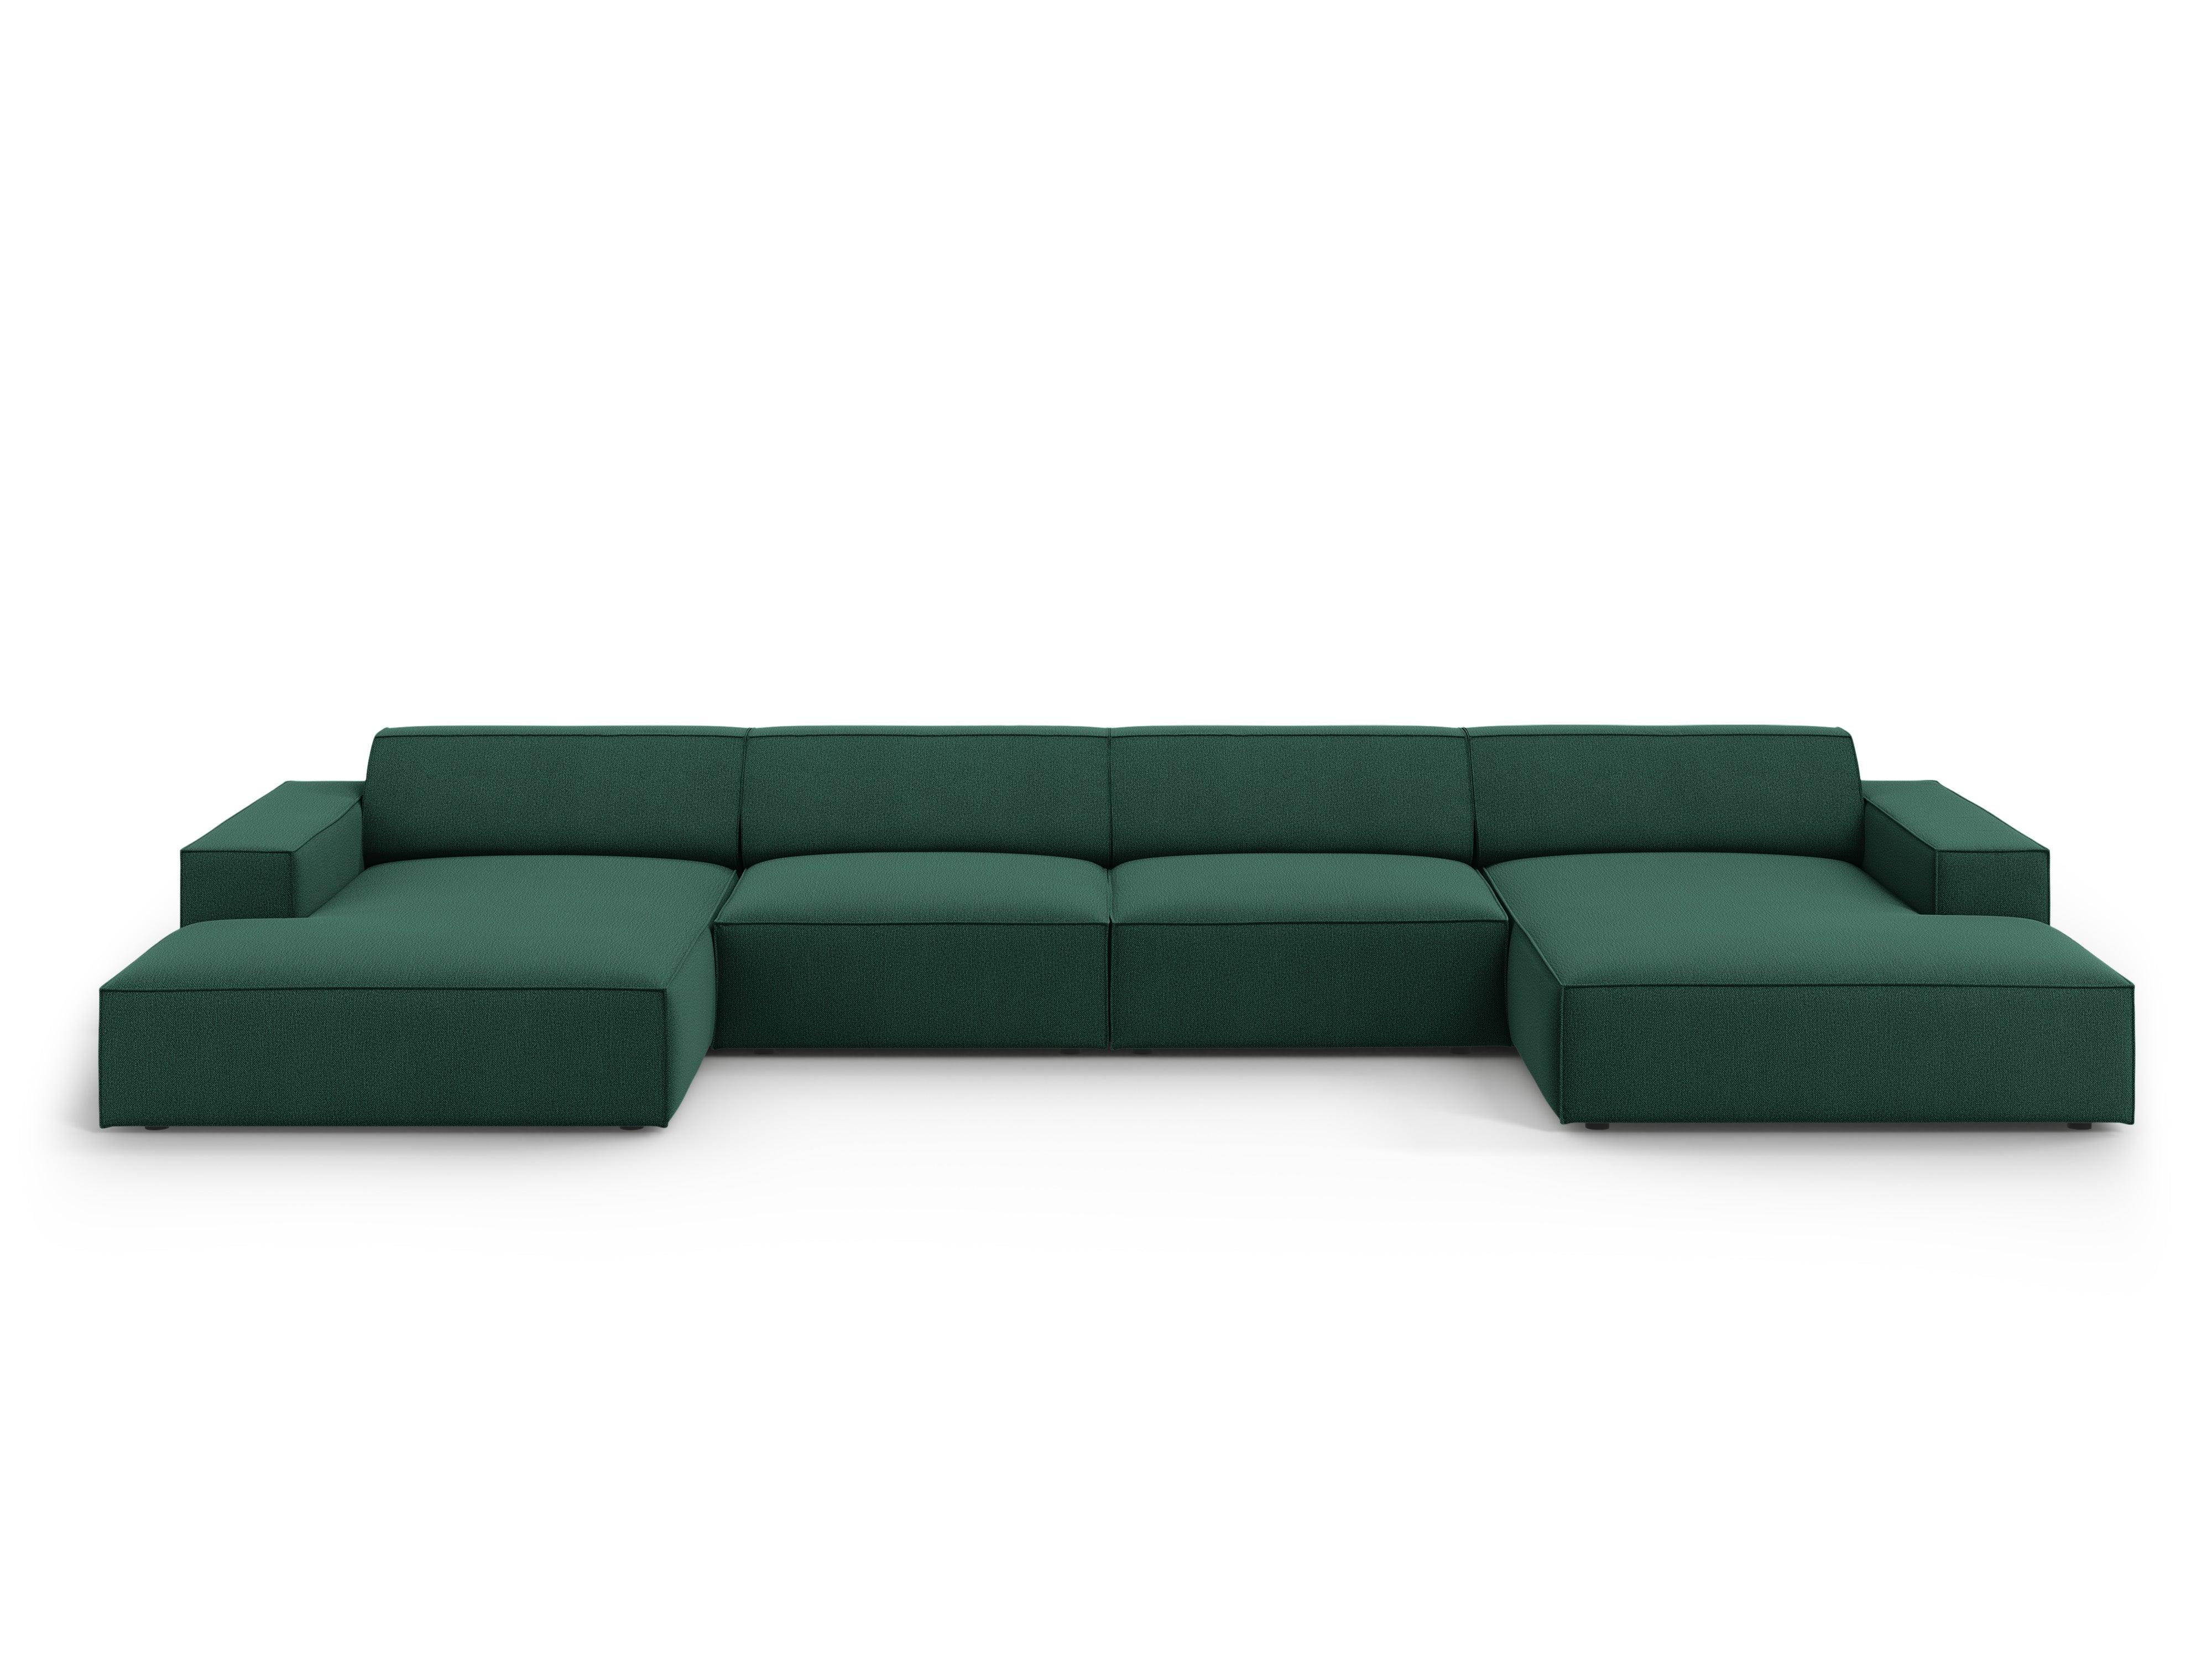 Panoramic Sofa, "Jodie", 6 Seats, 364x166x70
Made in Europe, Micadoni, Eye on Design